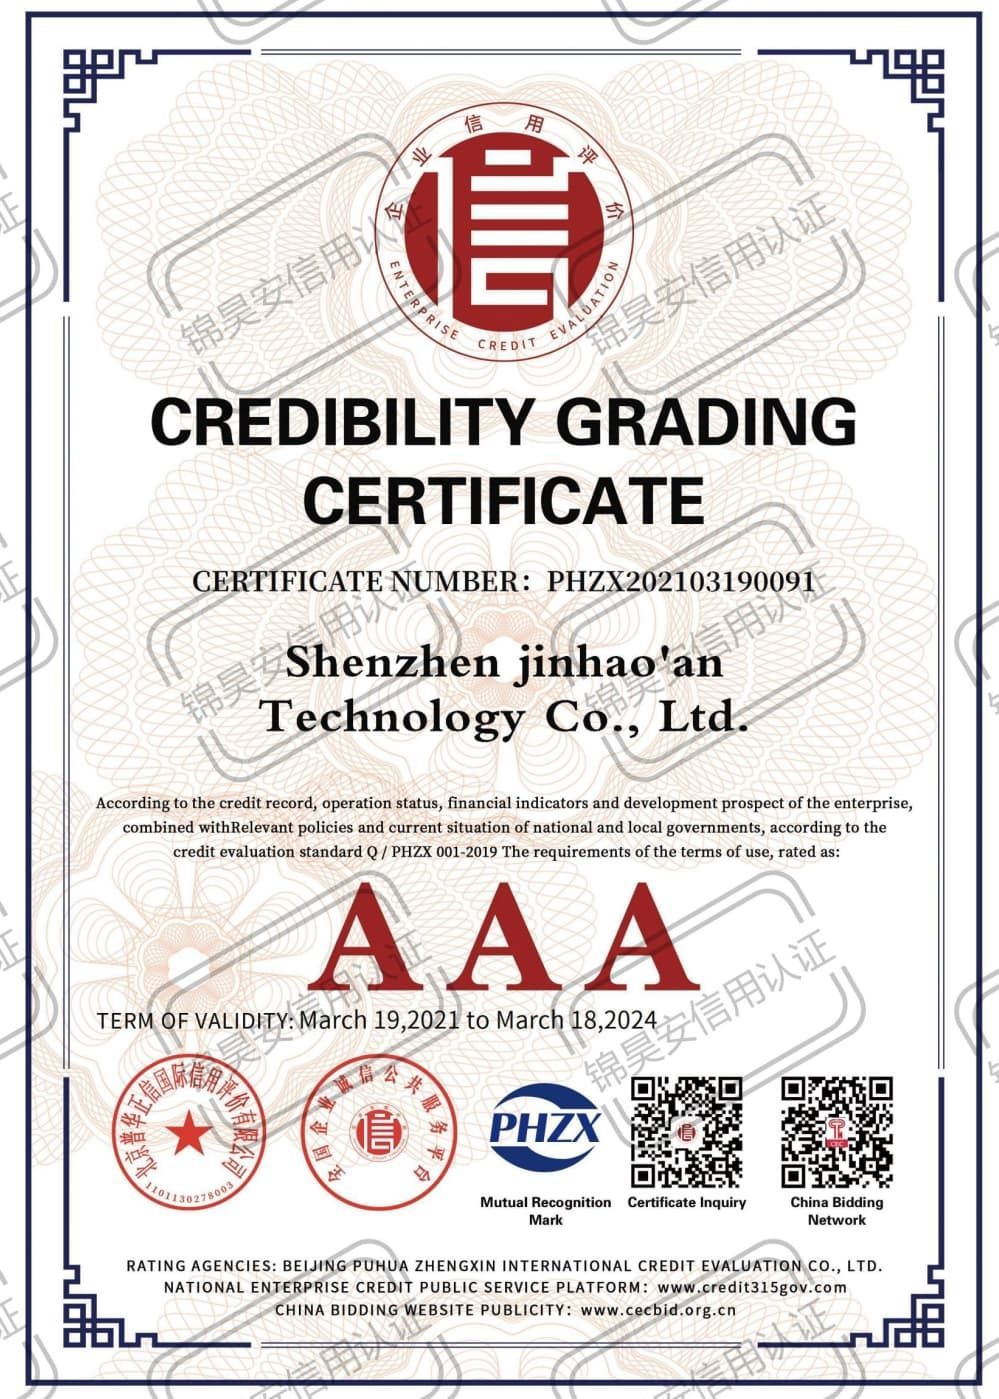 Credibility Grading Certificate